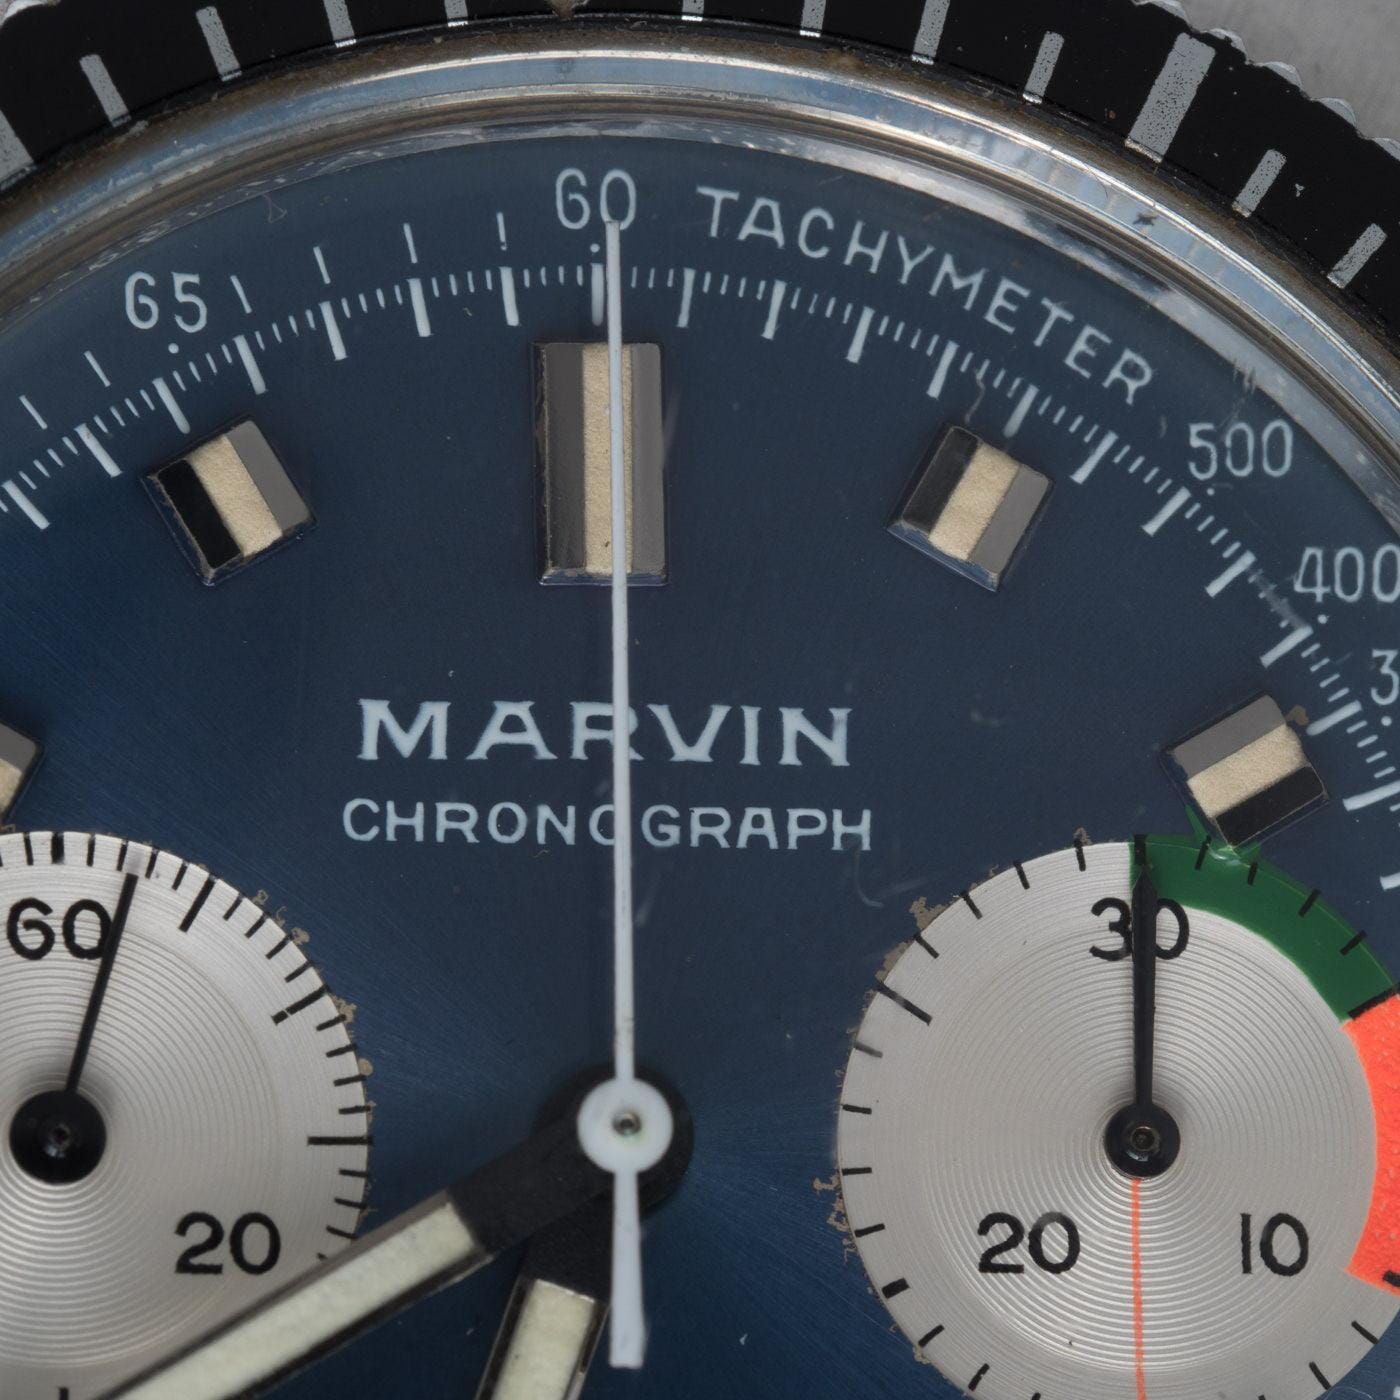 MARVIN Chronograph - Arbitro